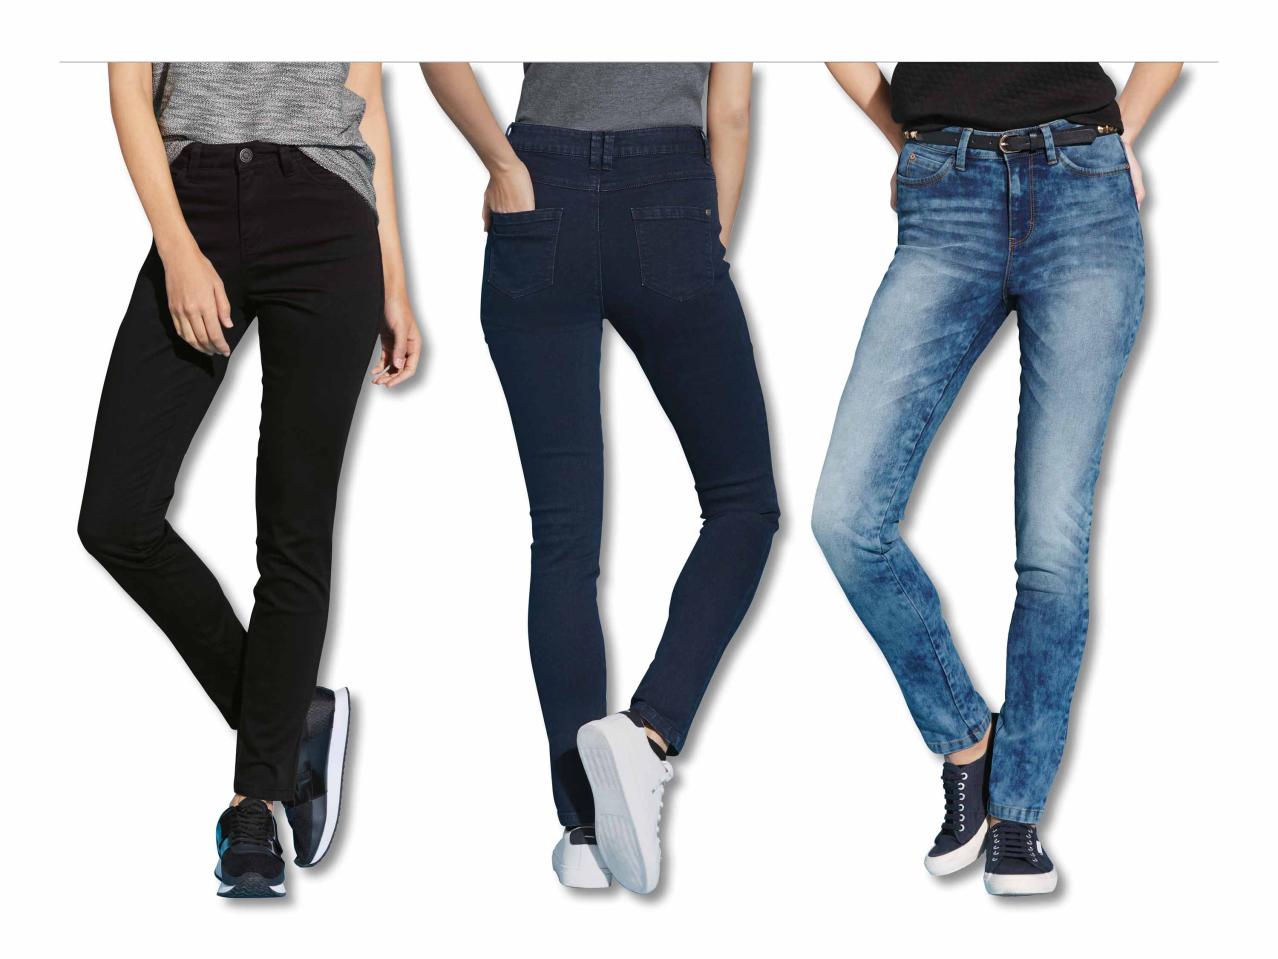 Pantalone/ jeans1